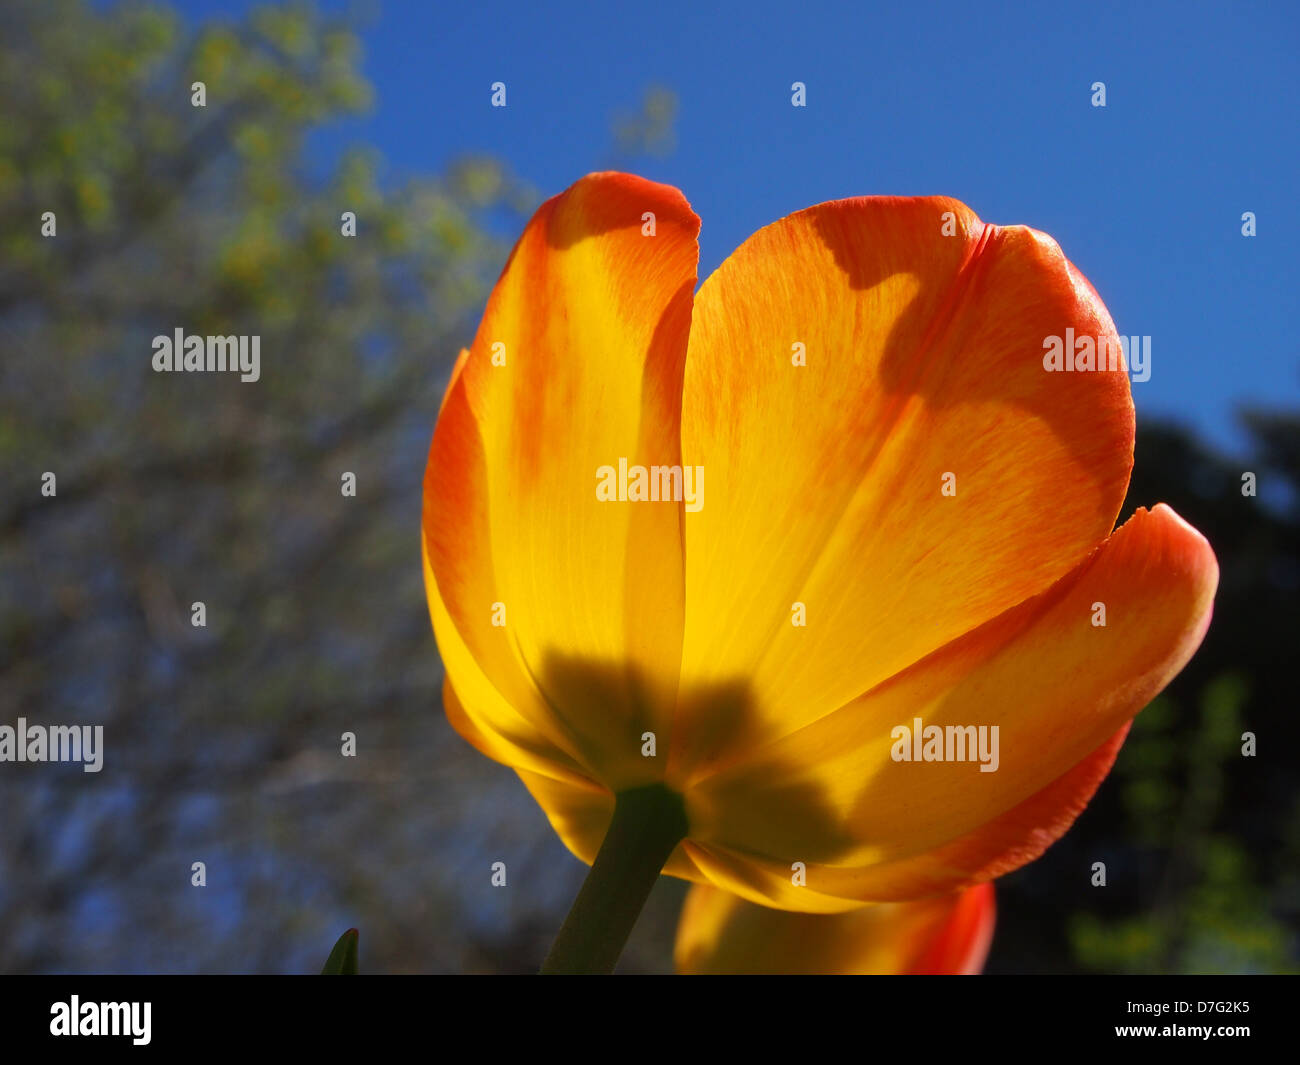 one orange tulip from below blue sky blurred background Stock Photo